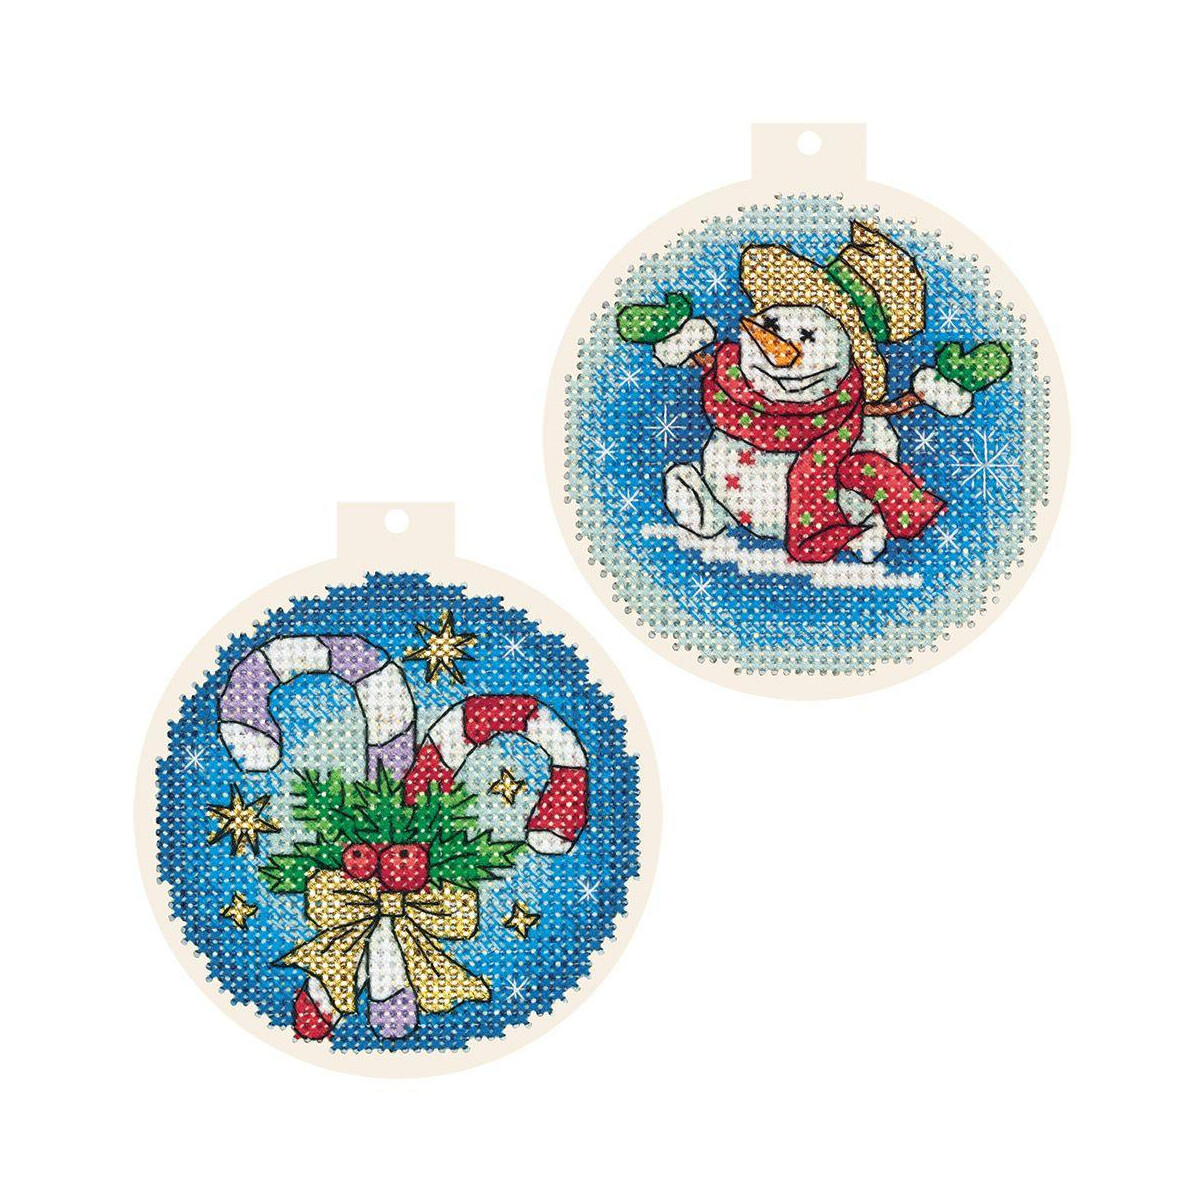 Panna counted cross stitch kit pendant "Christmas...